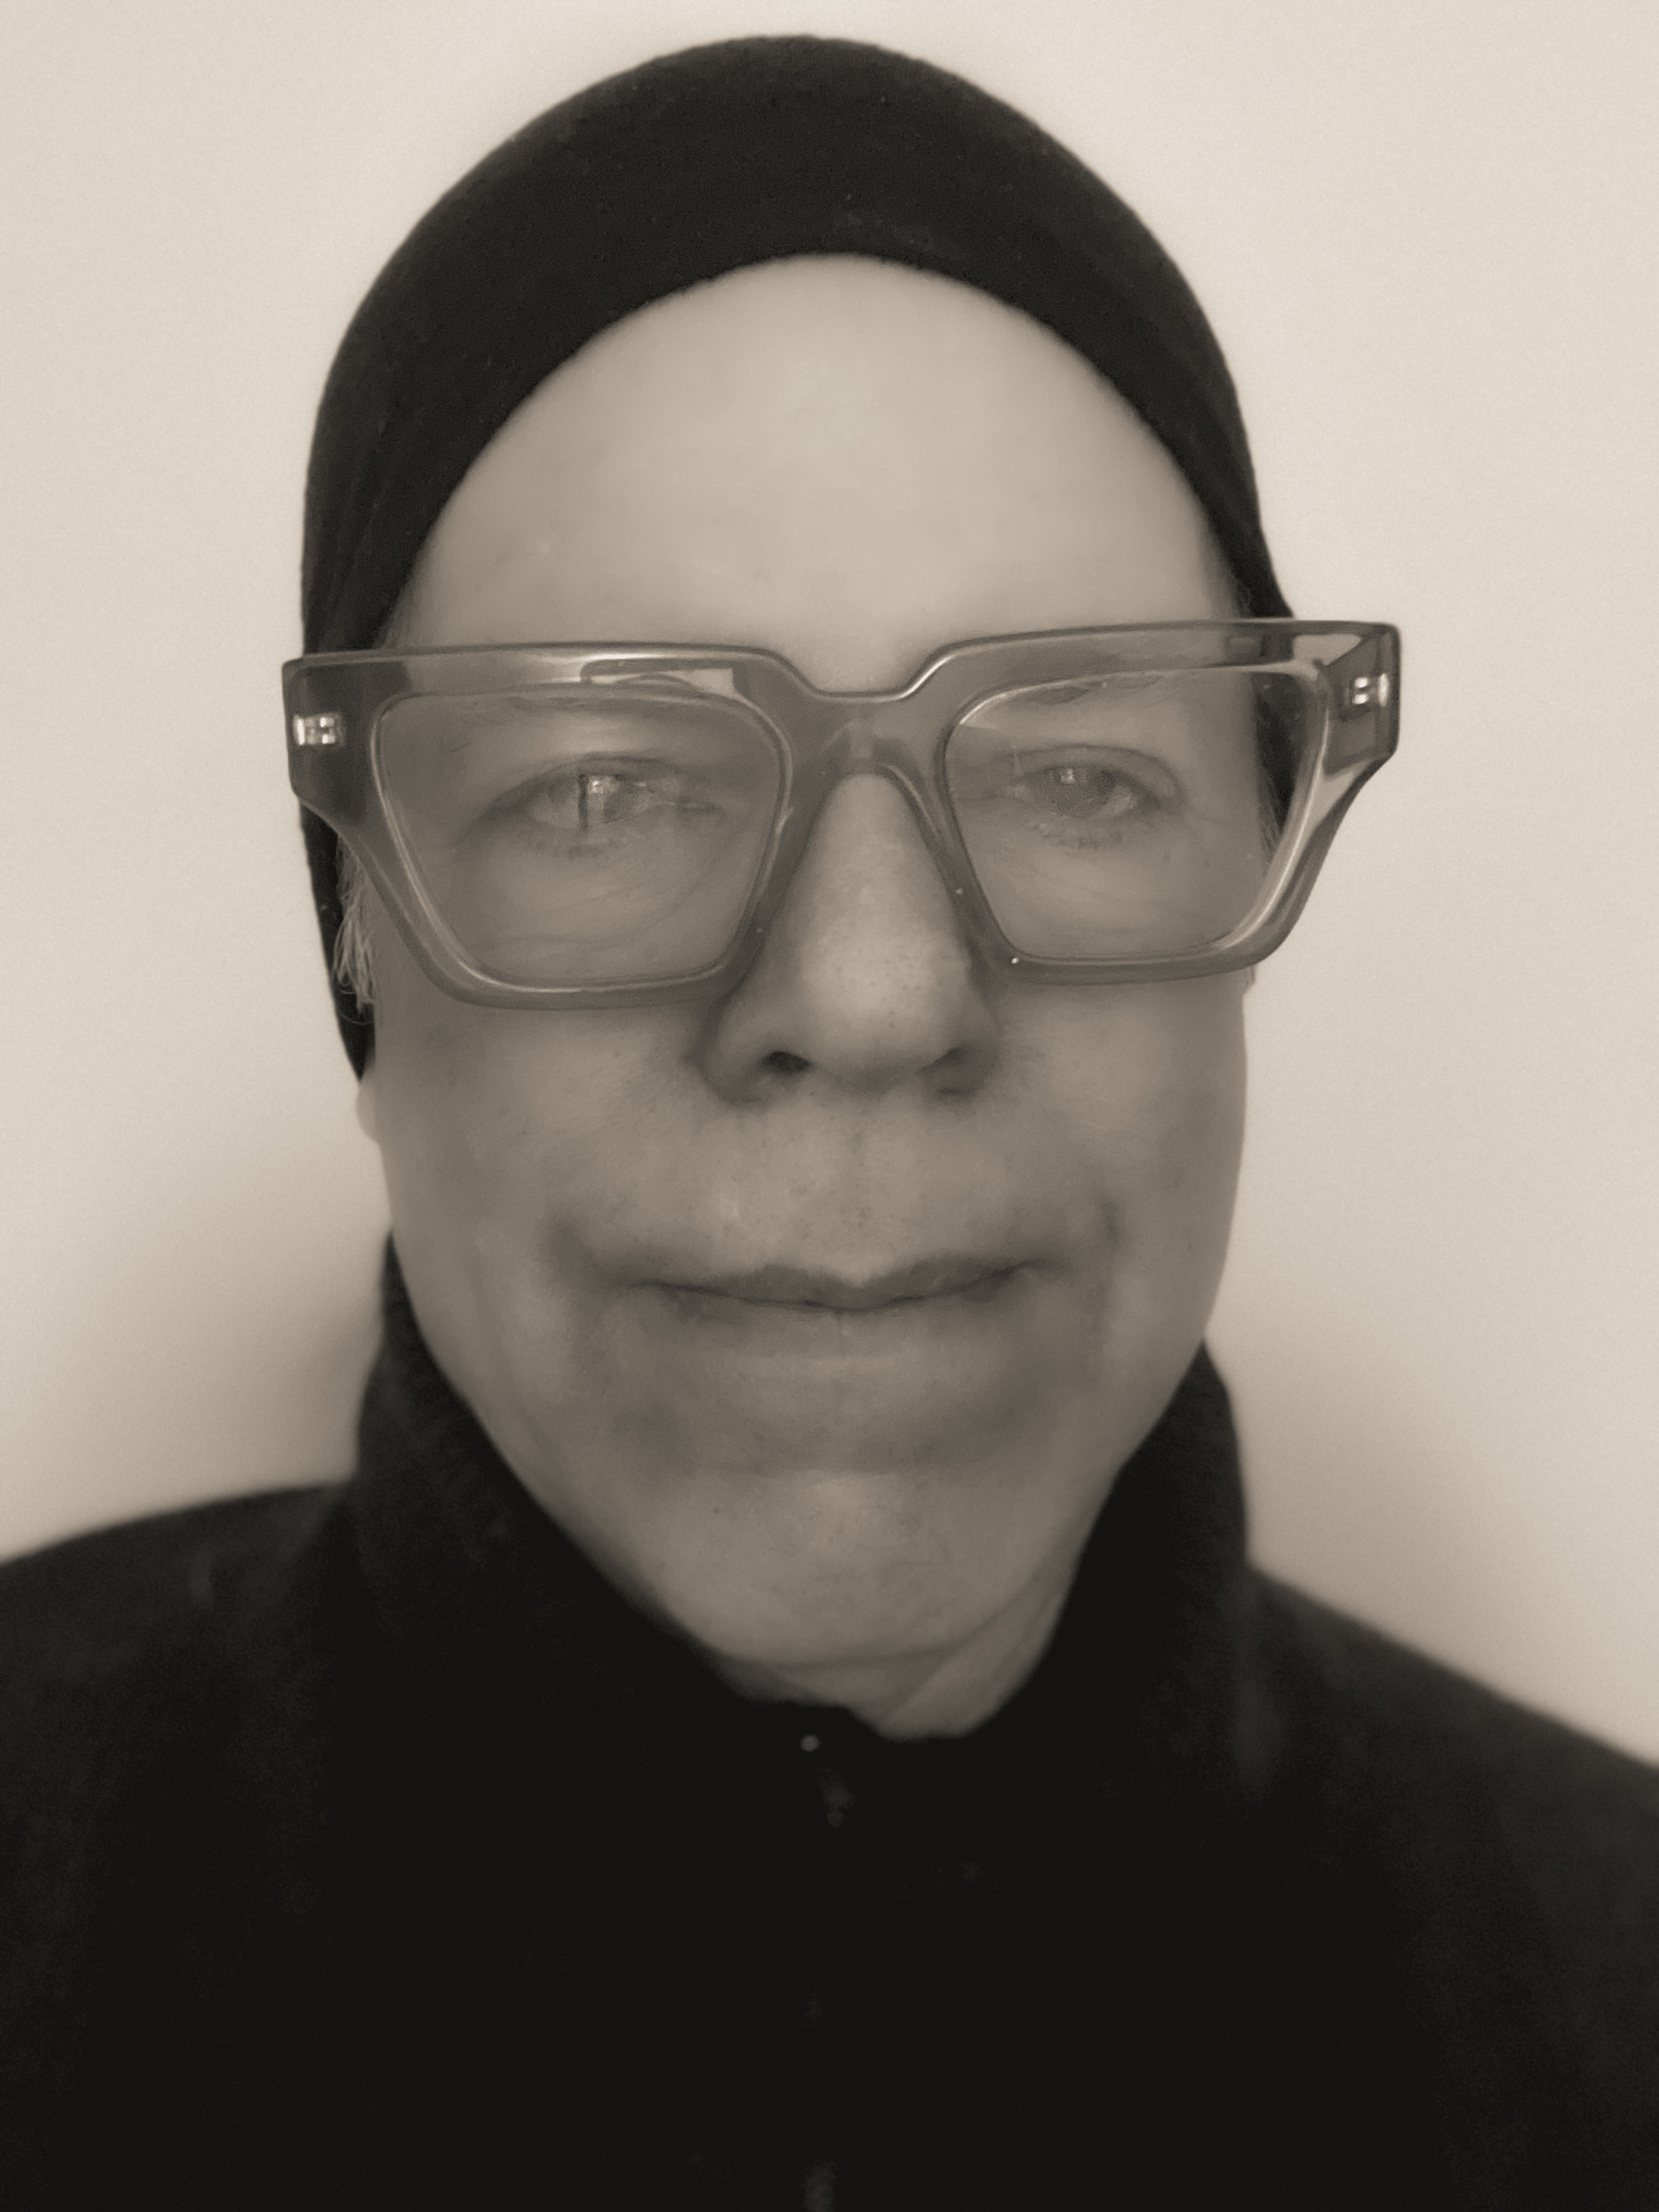 Selfie head shot of artist with prominent crystal frame glasses, black headband and dark grey turtleneck.